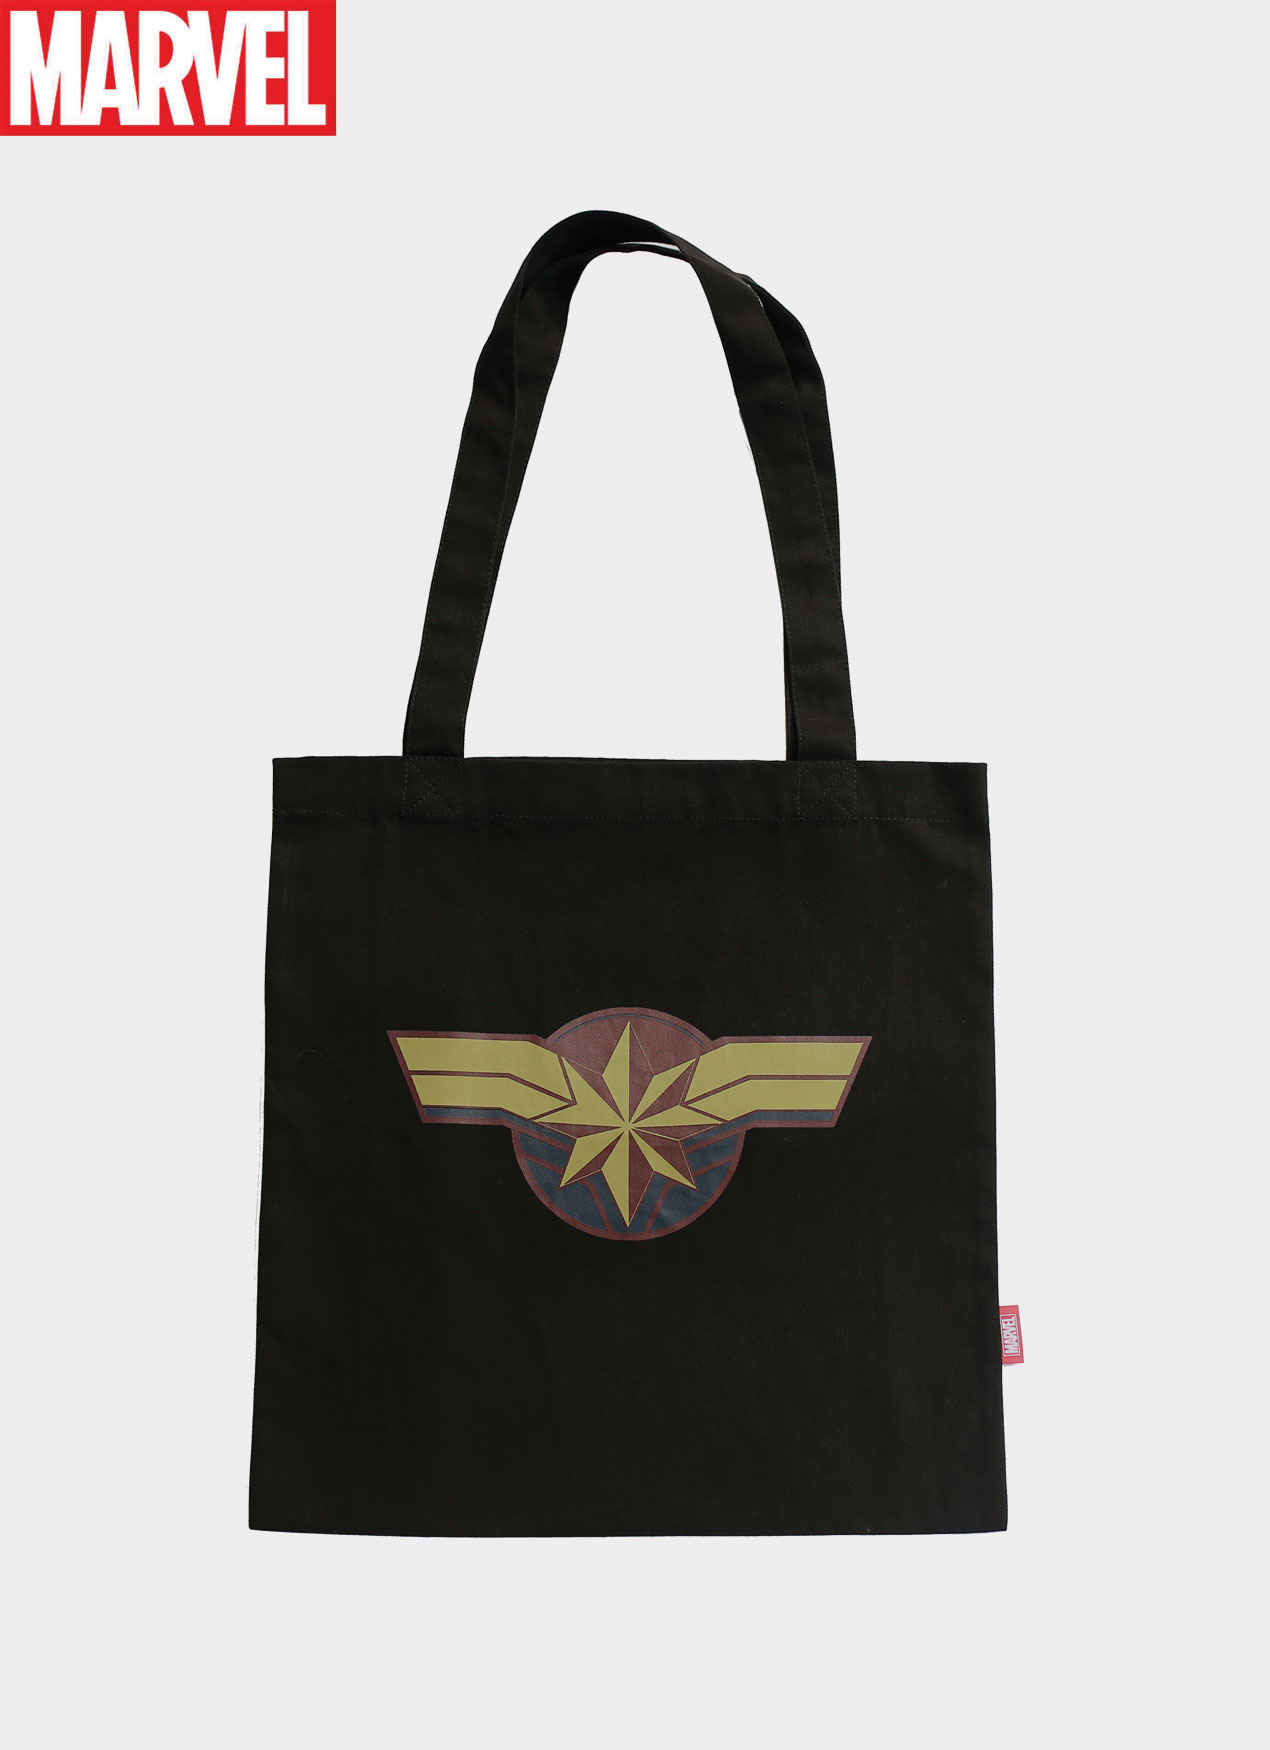 Product Women Bags Captain Marvel Tote Bag Black